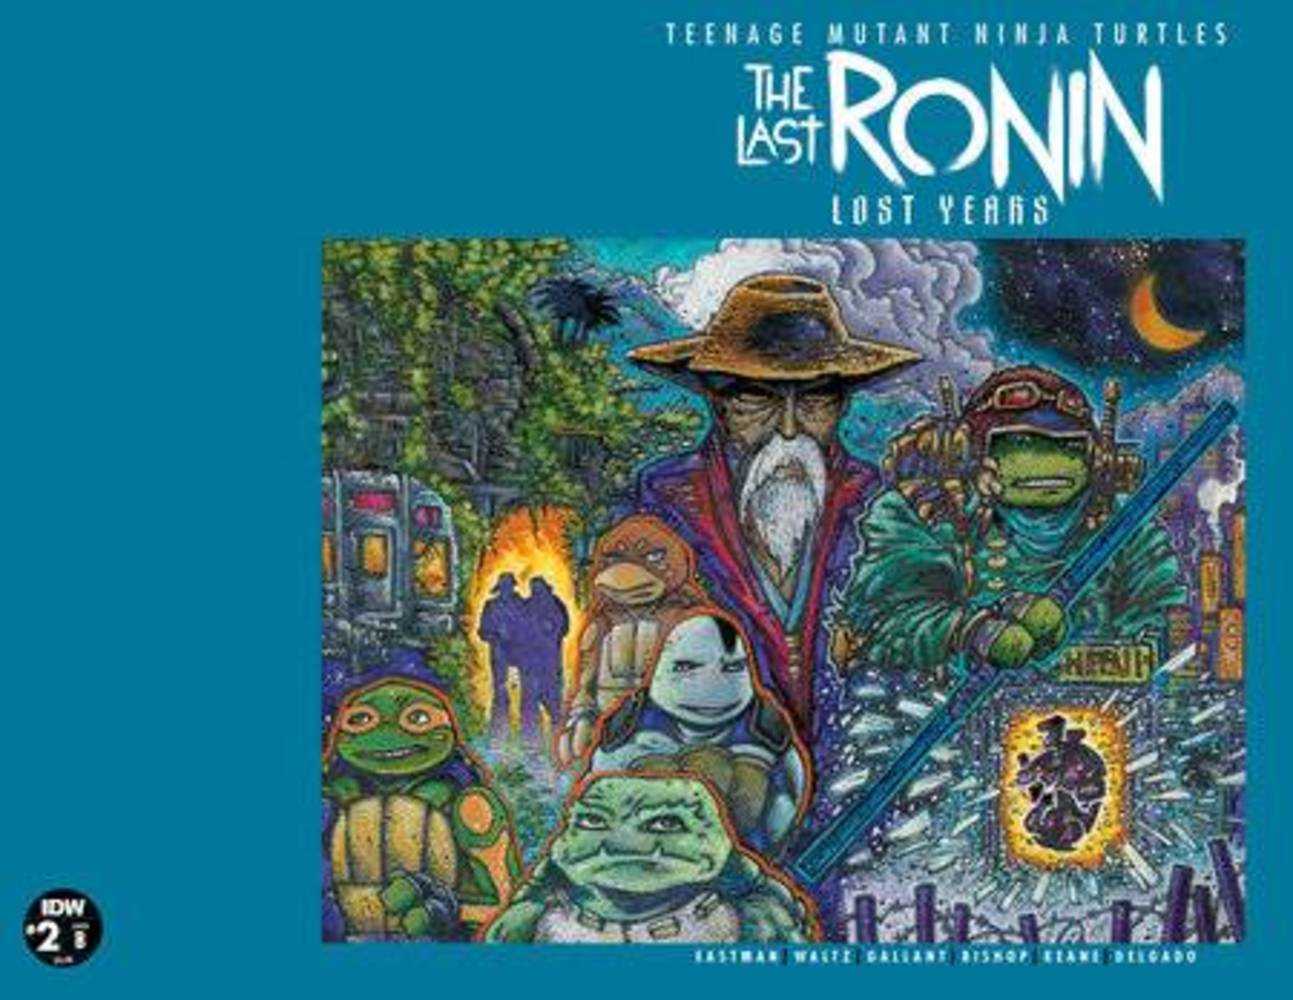 Teenage Mutant Ninja Turtles Last Ronin Lost Years #2 Cover B Eastman & Bishop - The Fourth Place